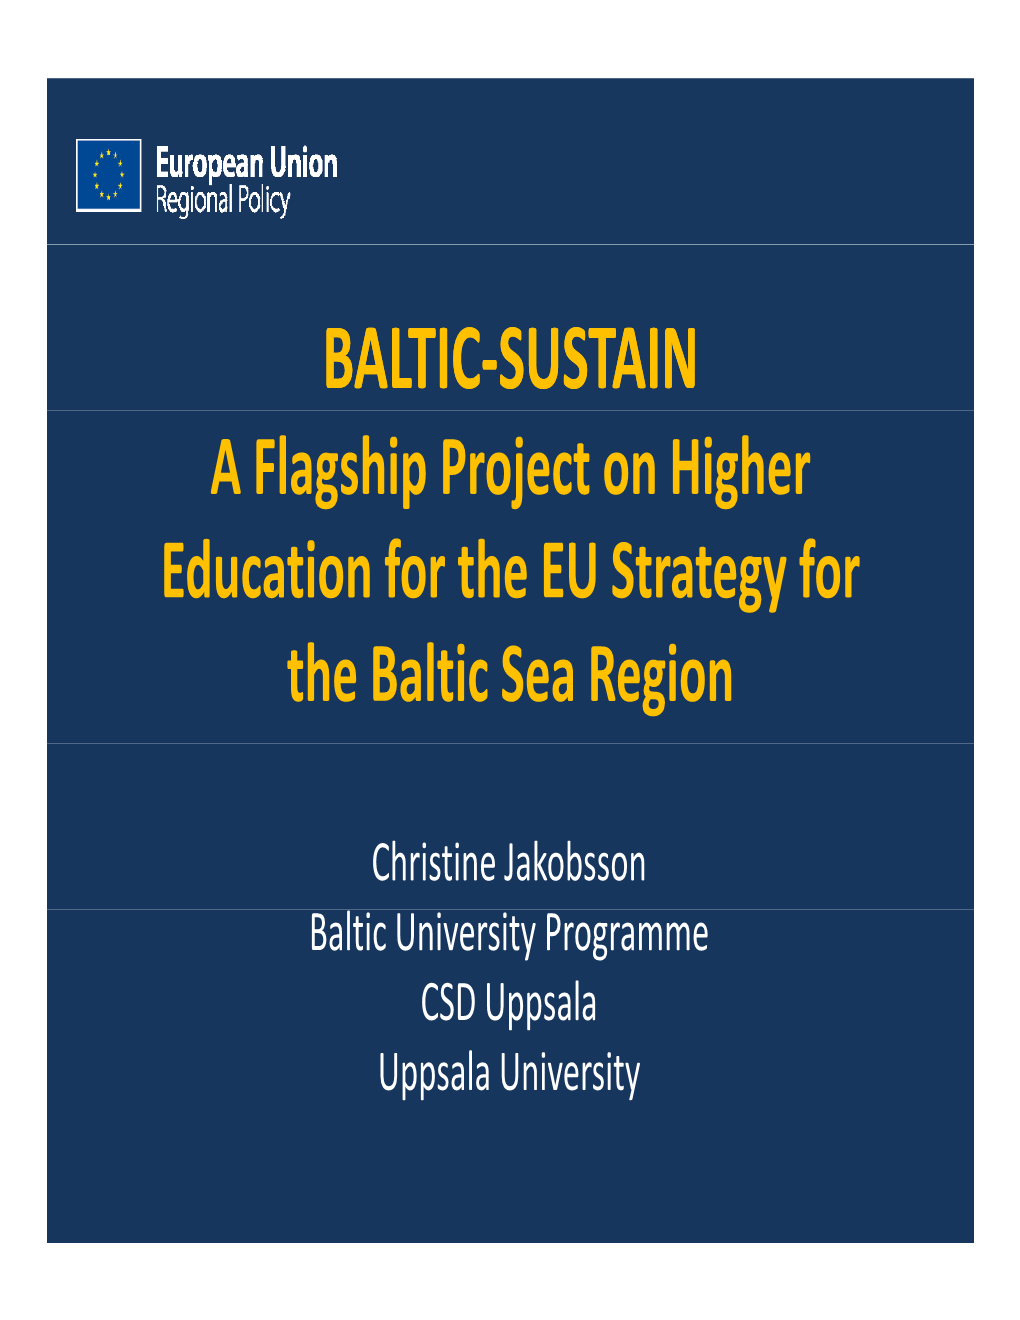 The Baltic University Programme